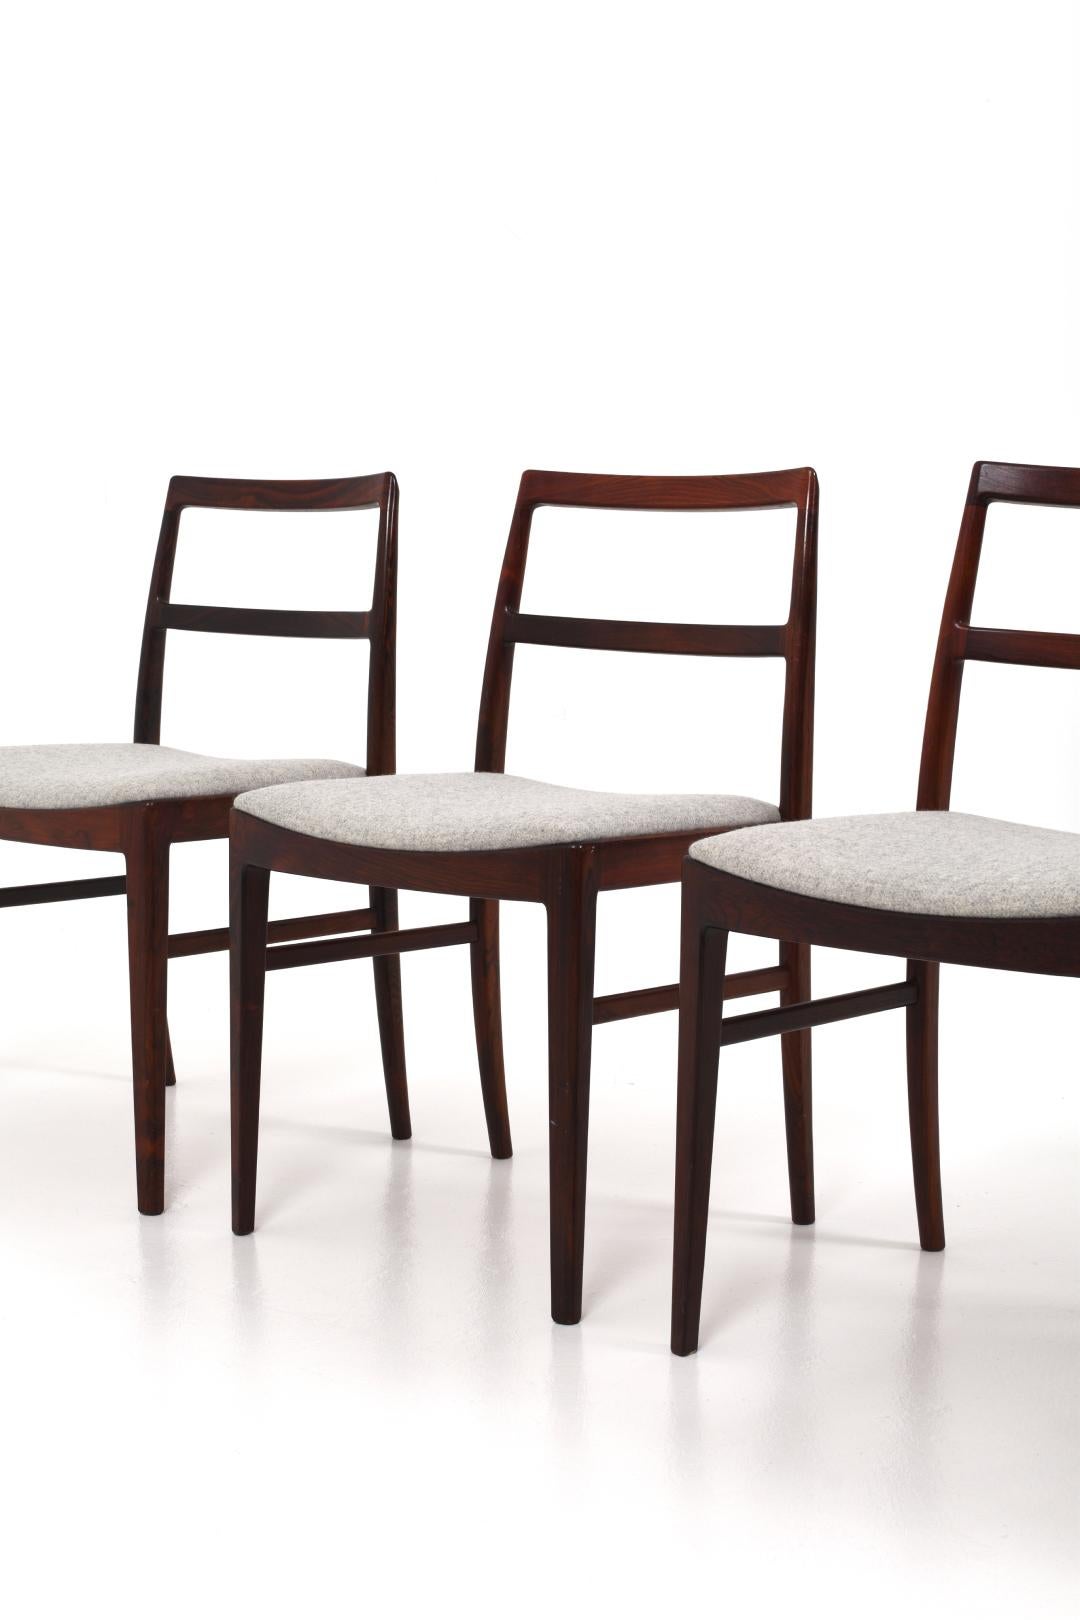 Arne Vodder Model 430 Dining Chairs for Sibast Møbler, set of 4 In Good Condition For Sale In Göteborg, SE